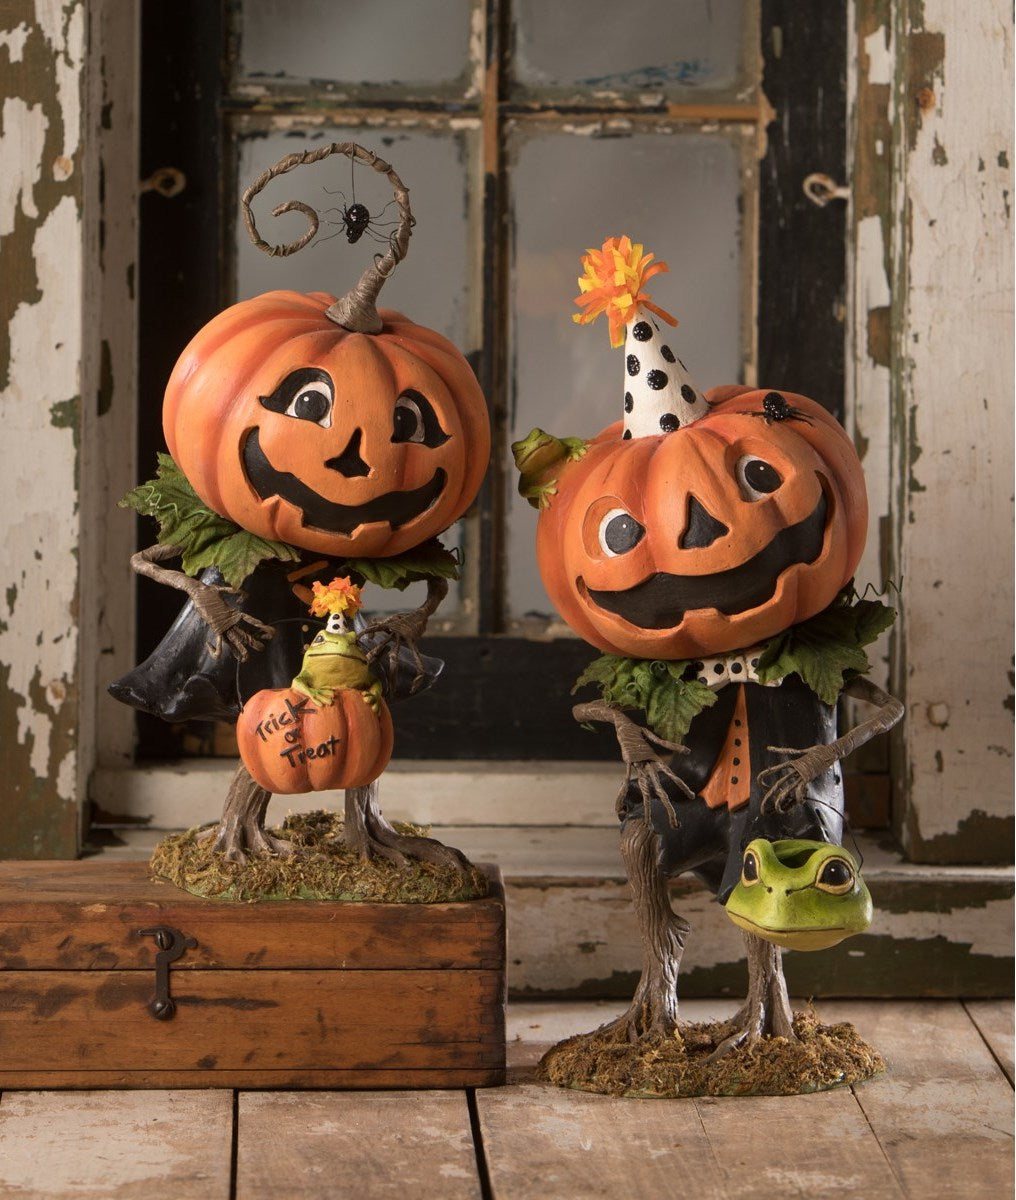 Tricks Pumpkin Boy & Treat Pumpkin Girl Figurines by Bethany Lowe